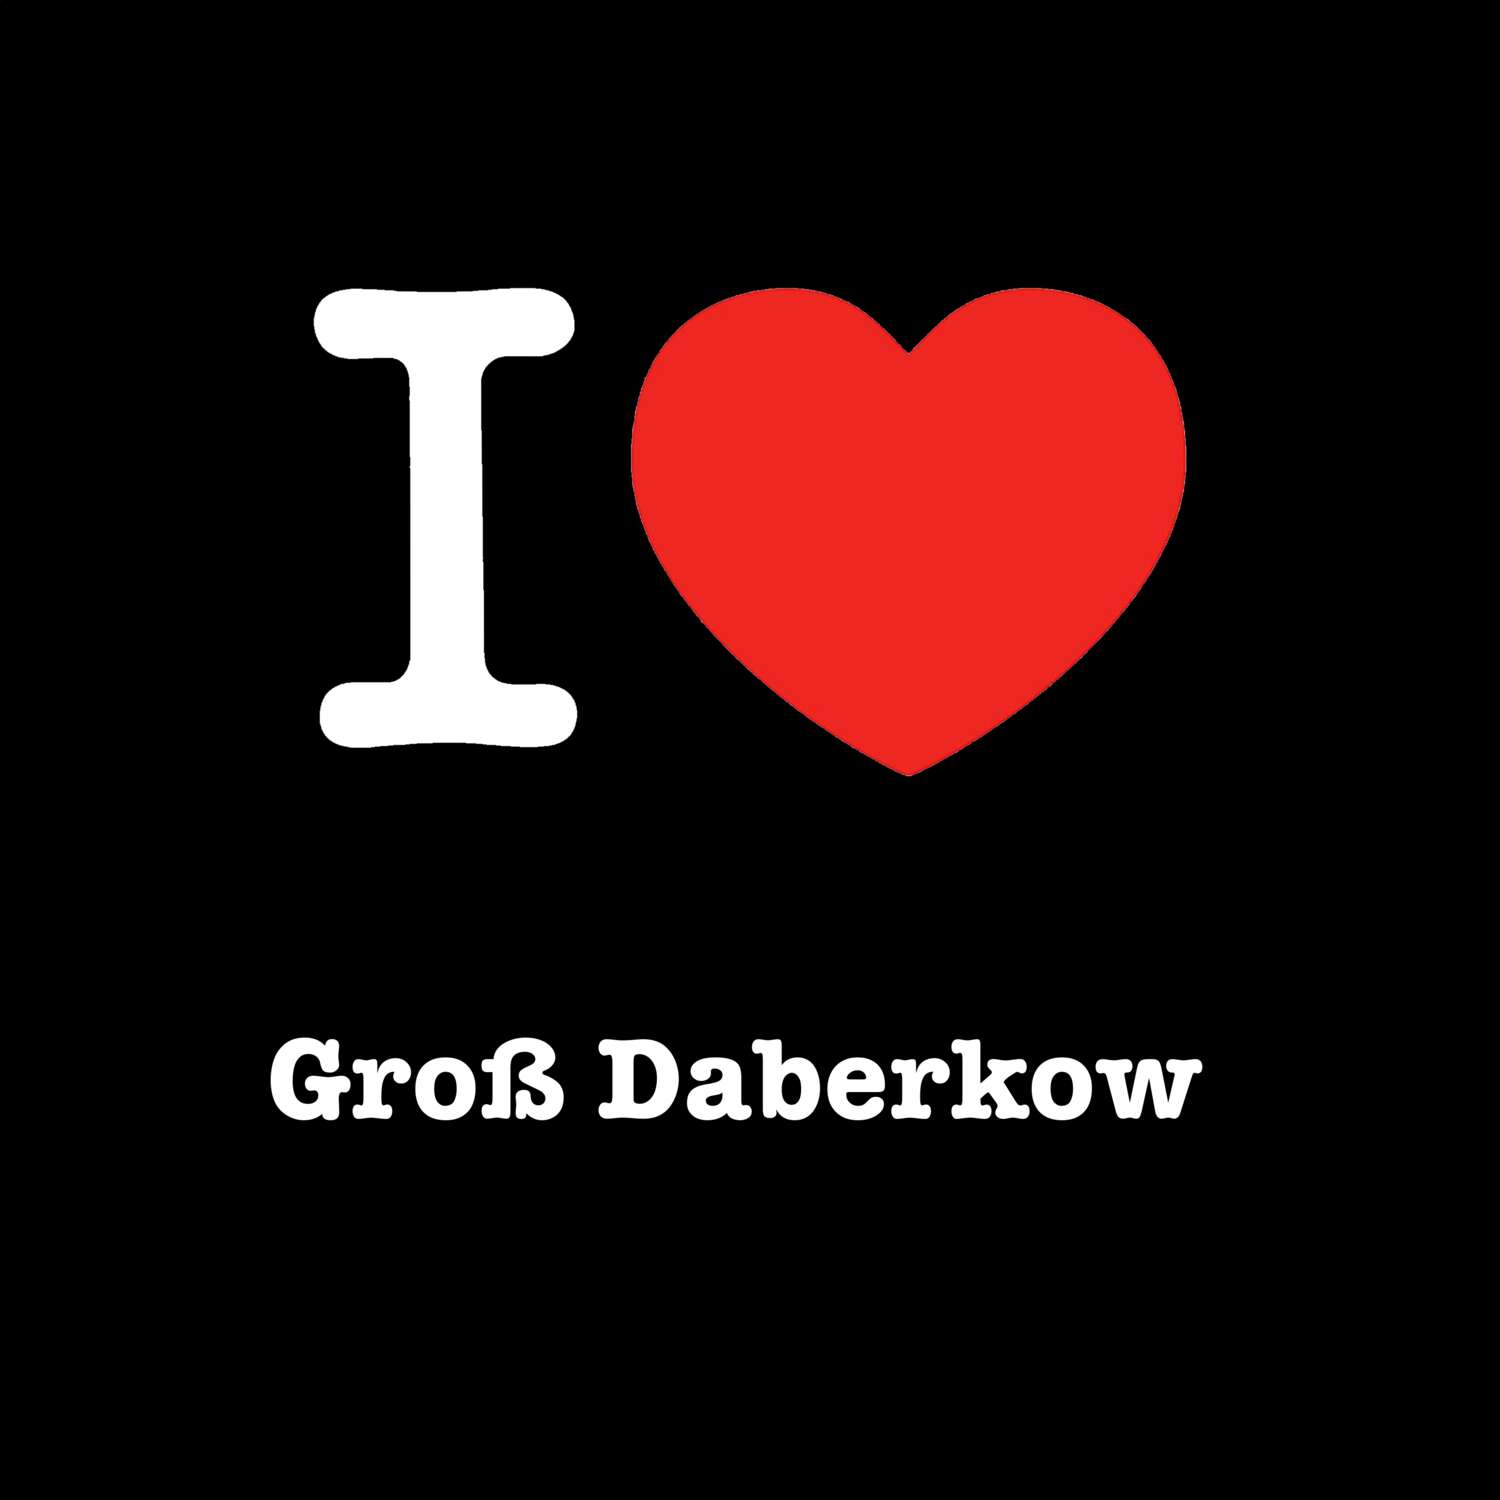 Groß Daberkow T-Shirt »I love«